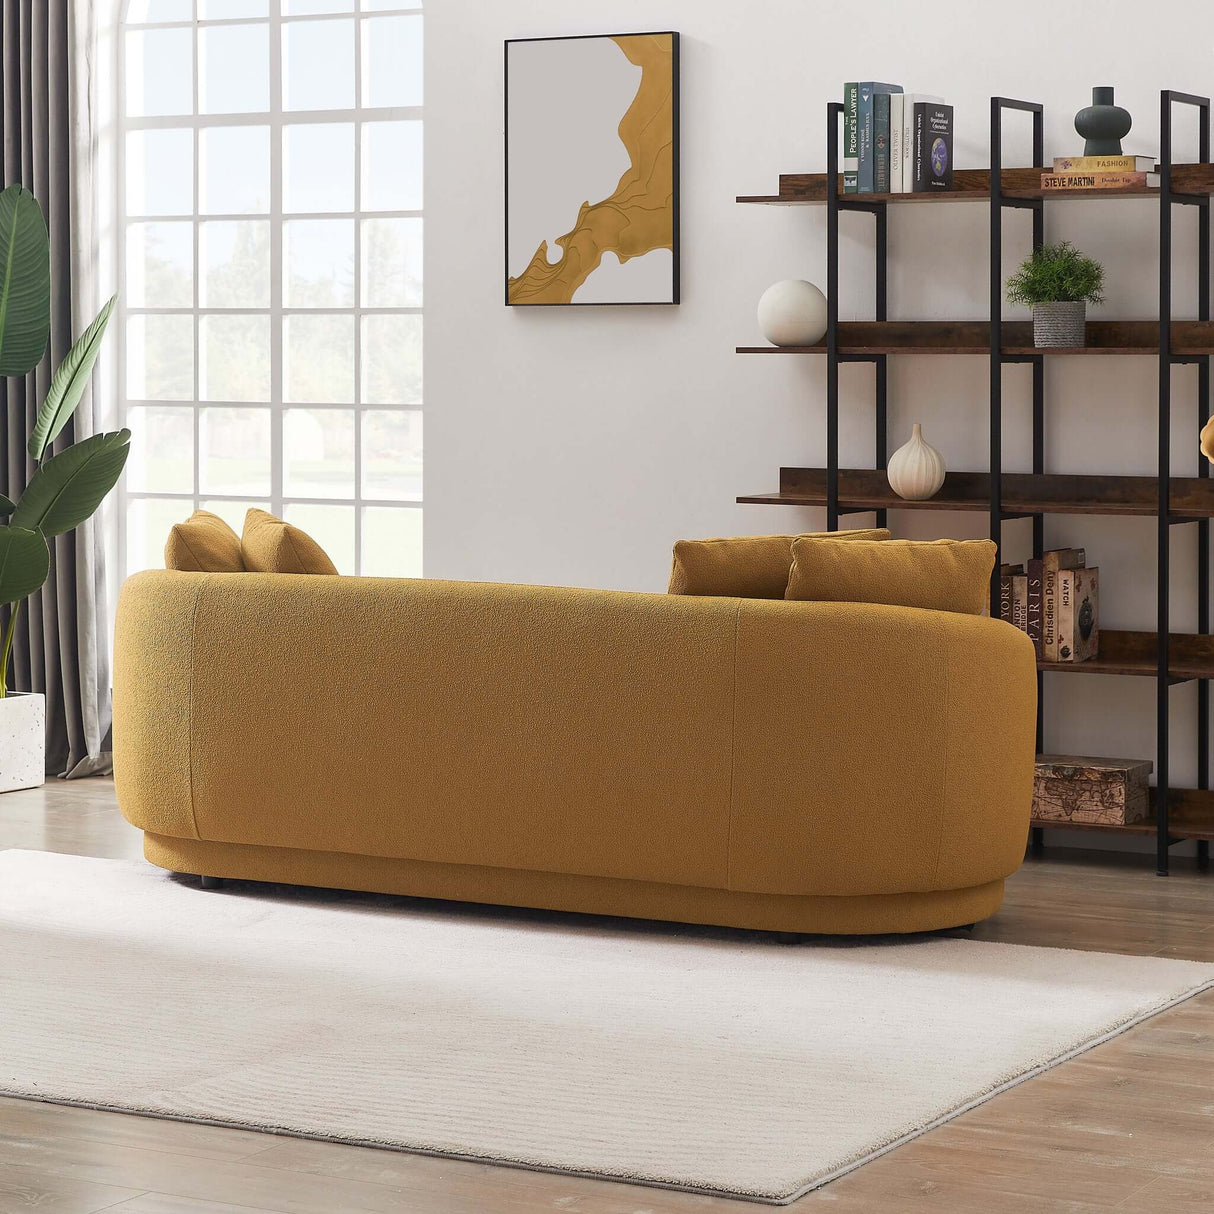 Olive green sofa living room